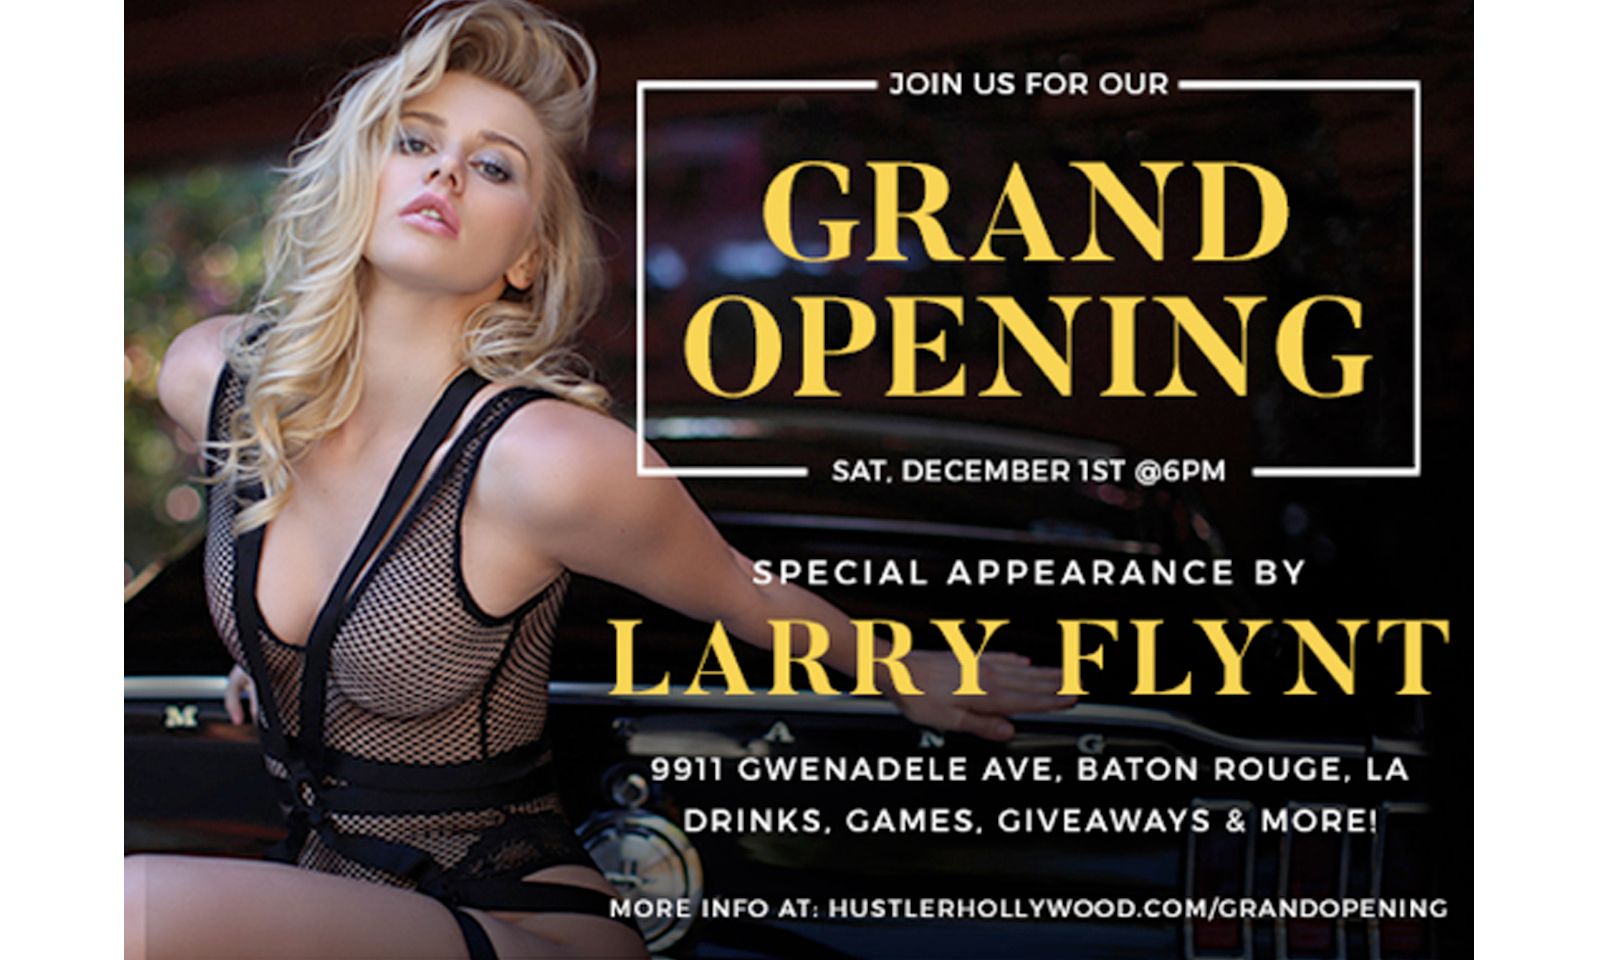 Hustler Hollywood Opening in Baton Rouge, Larry Flynt To Visit